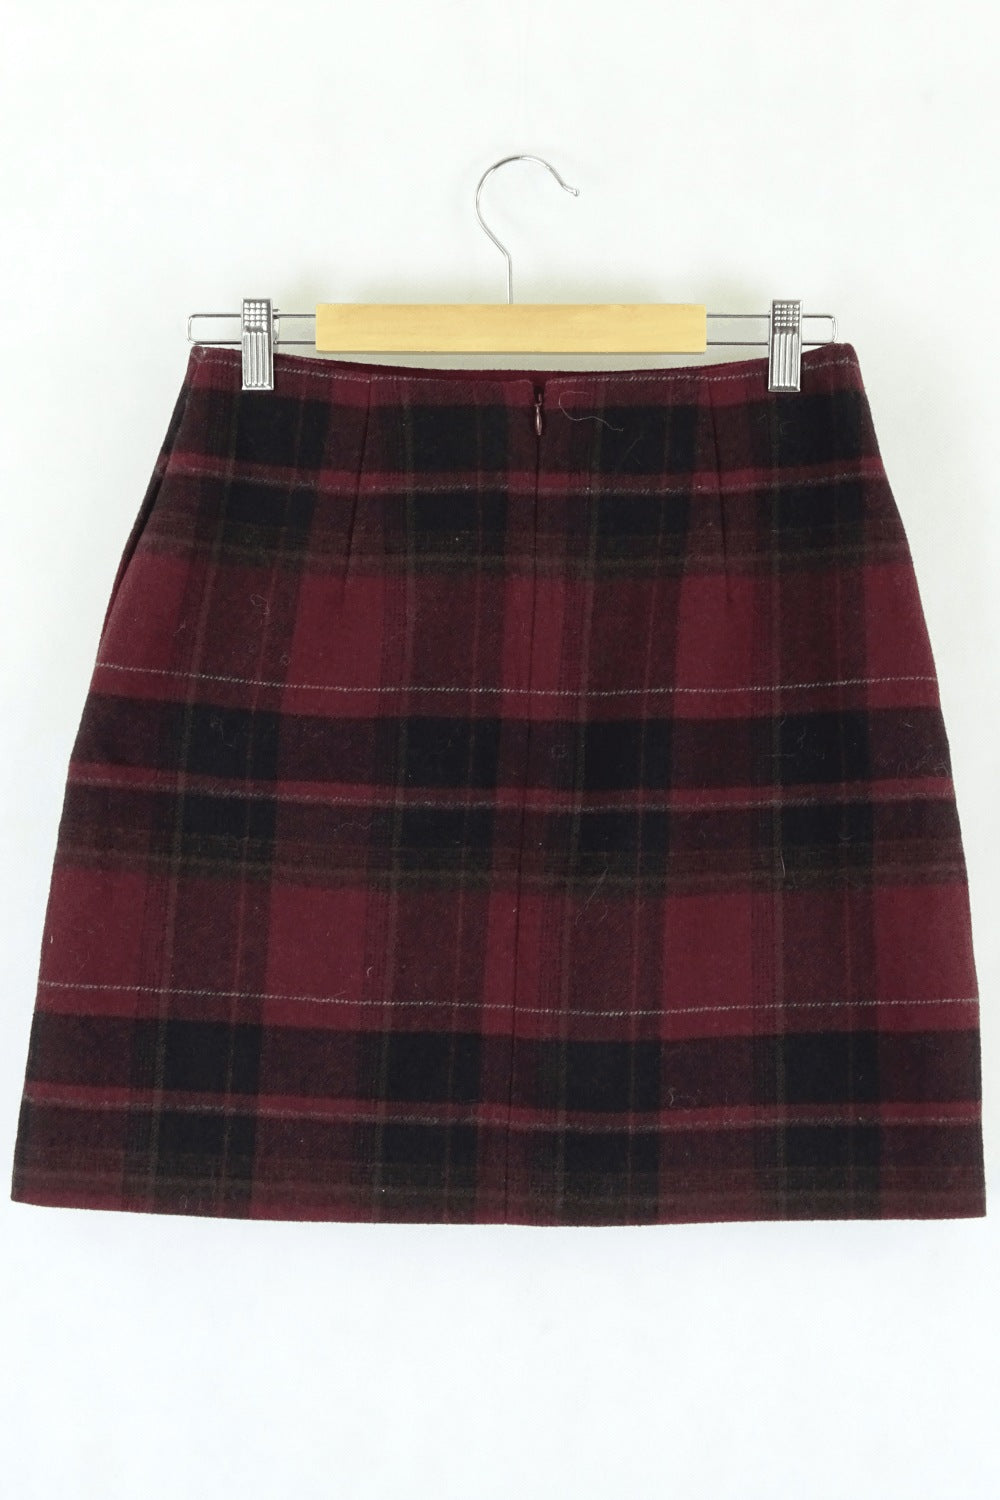 Uniqlo Maroon Skirt S